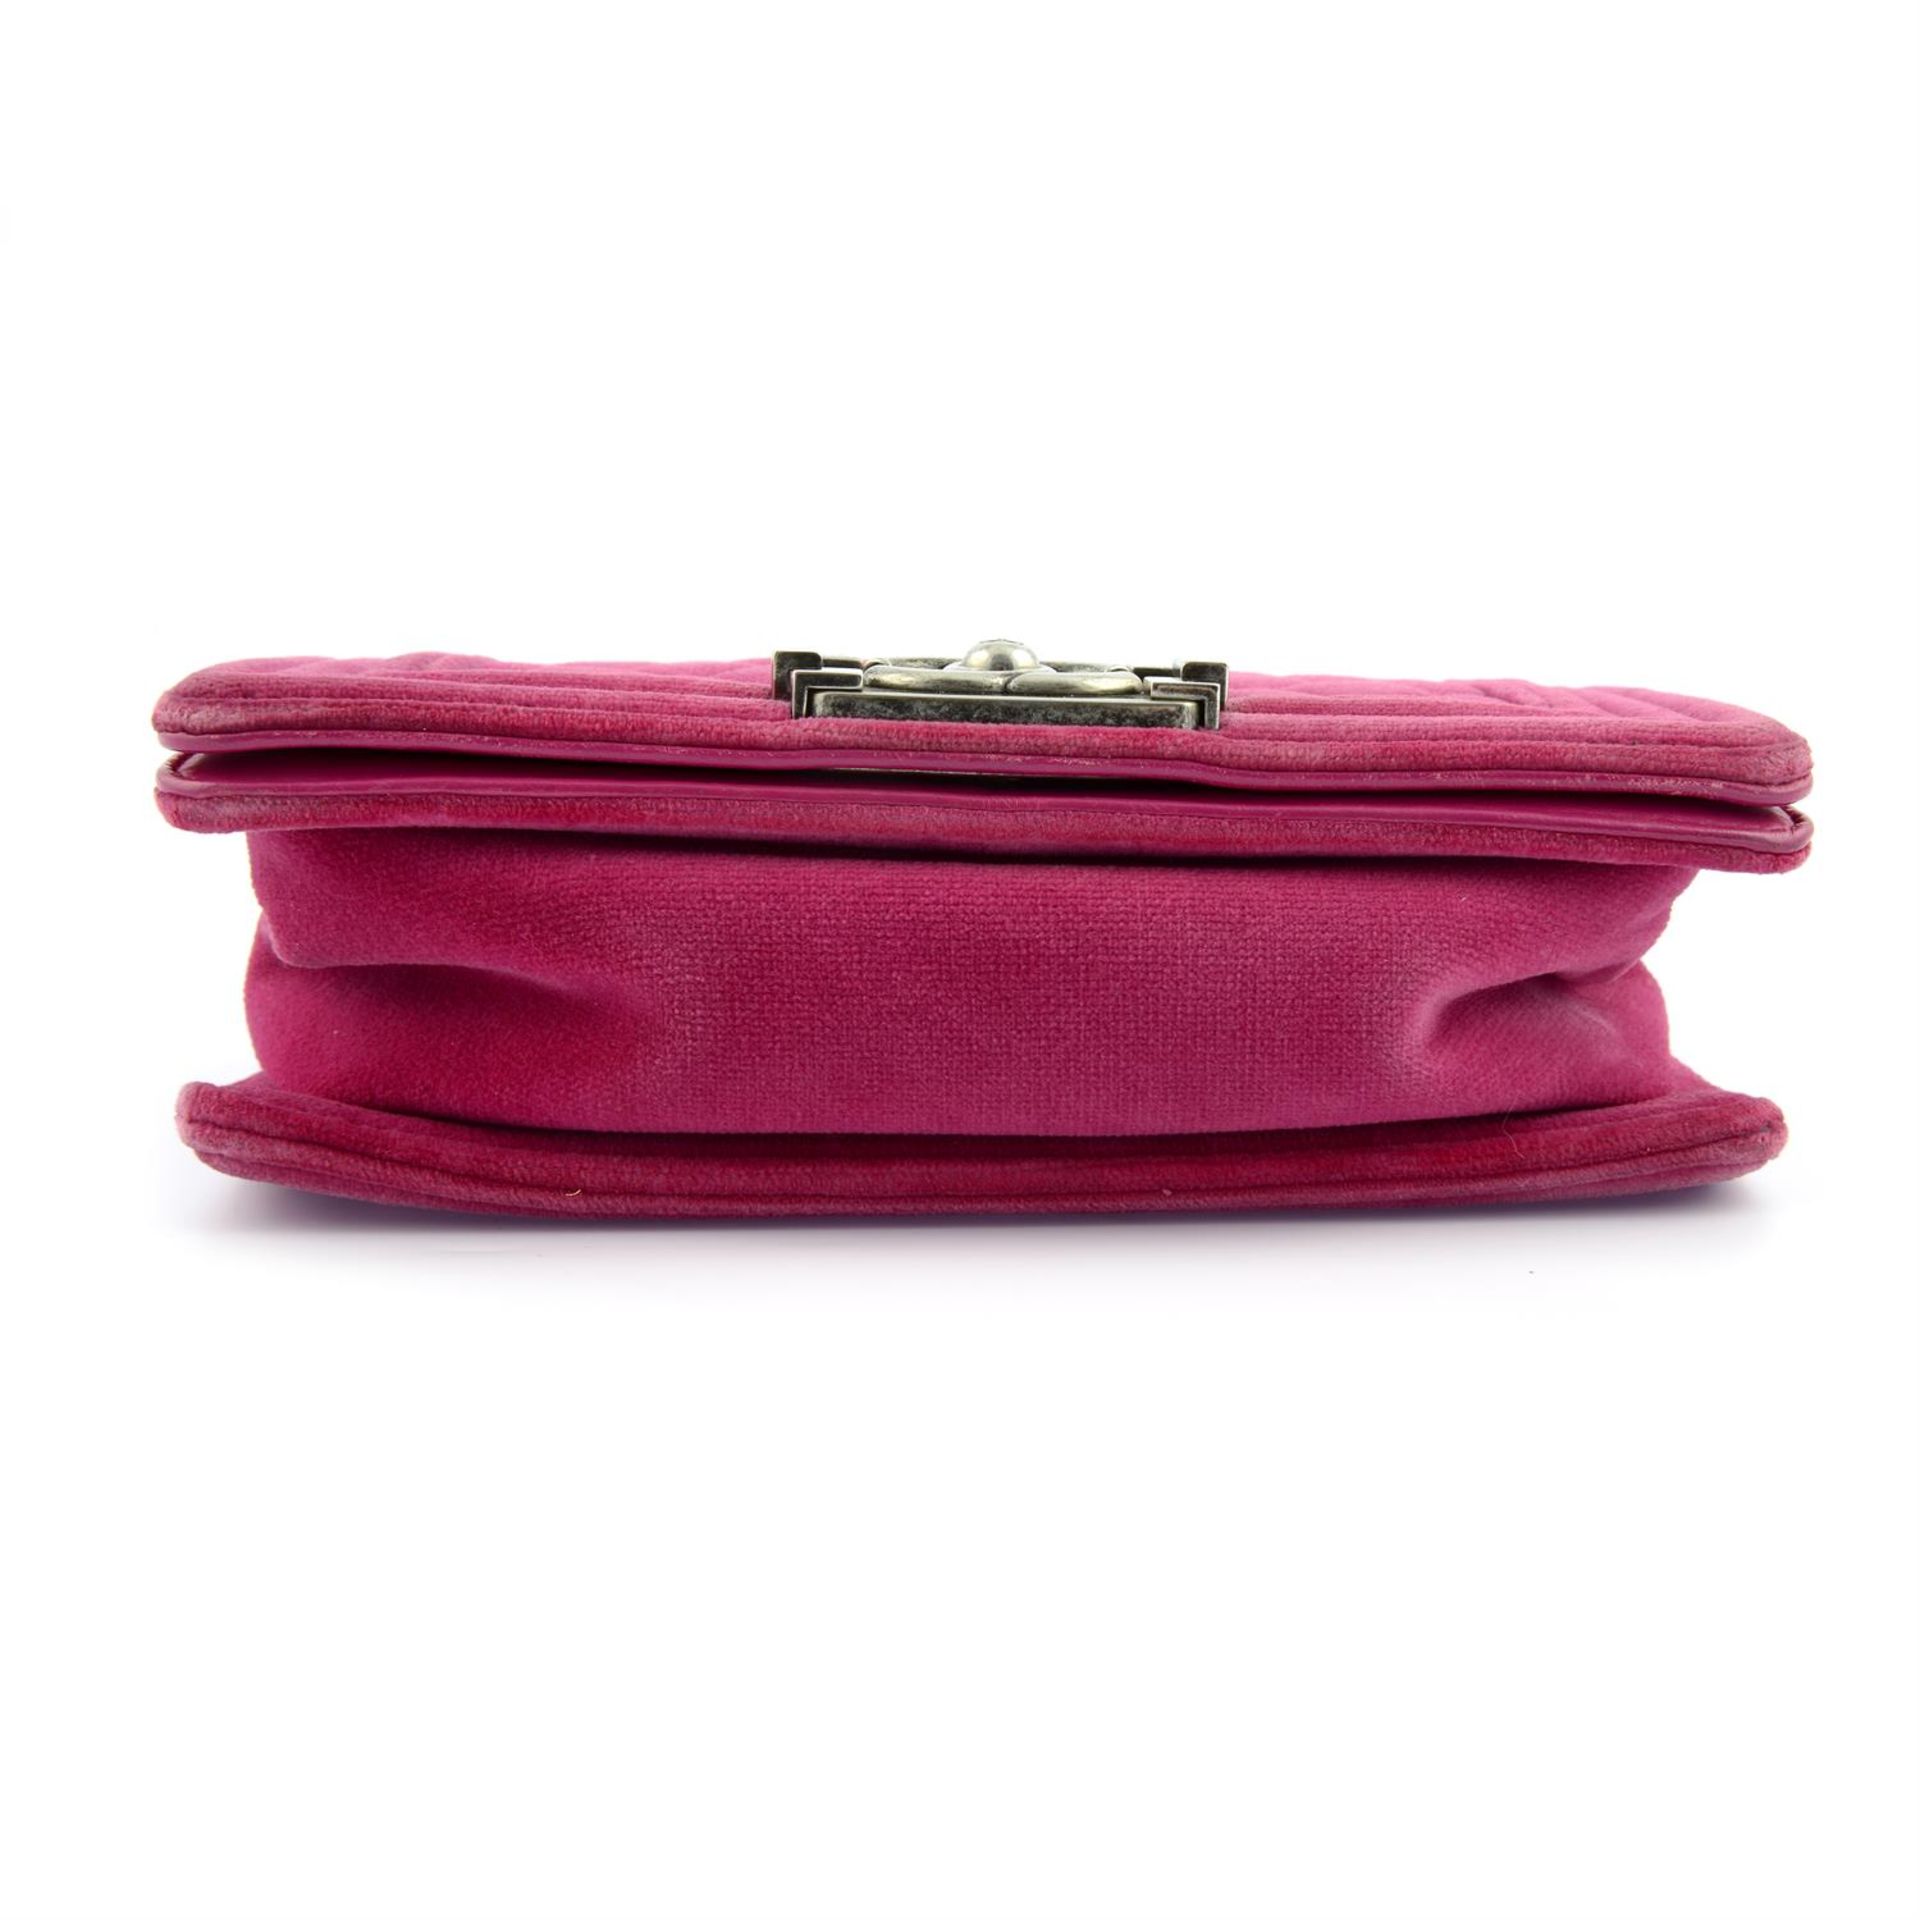 CHANEL - a pink velvet small Boy handbag. - Image 4 of 7